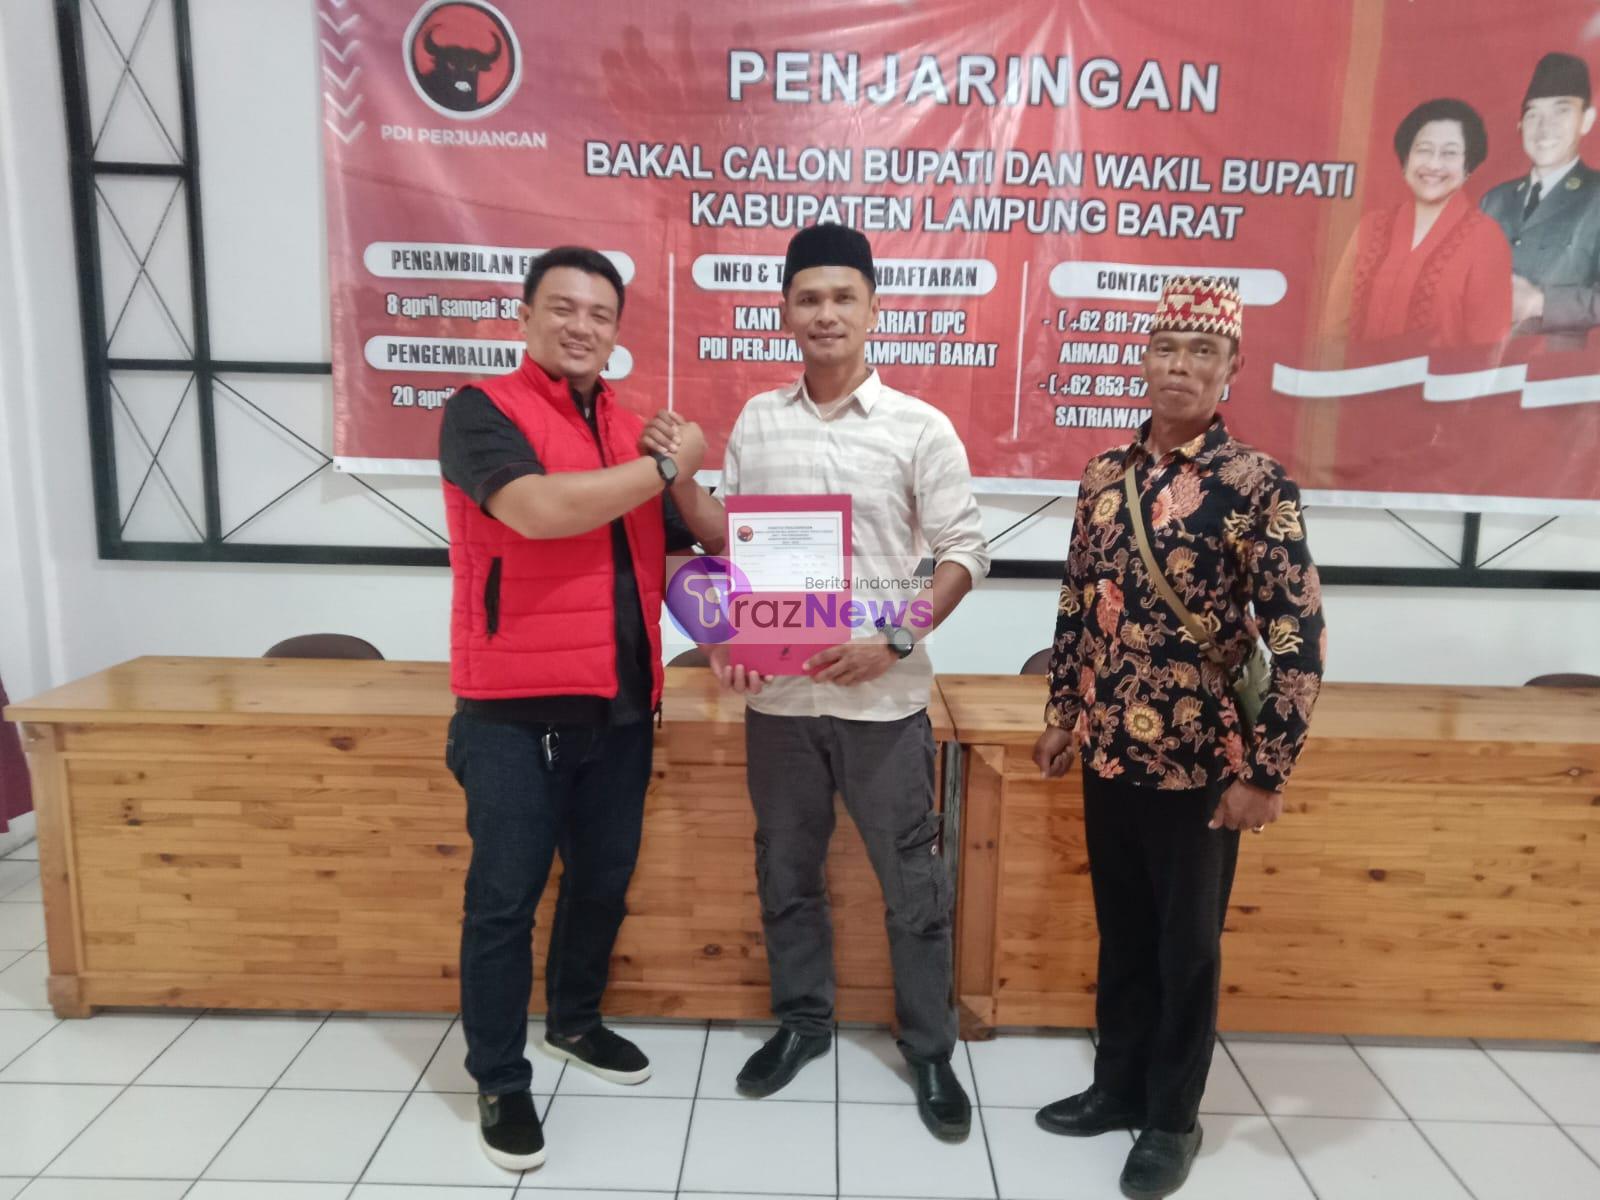 Agung Imam Prasetiyo Ambil Berkas Penjaringan Bakal Calon (Balon) Wakil Bupati (Wabup) Di kantor PDI Perjuangan Lampung Barat .